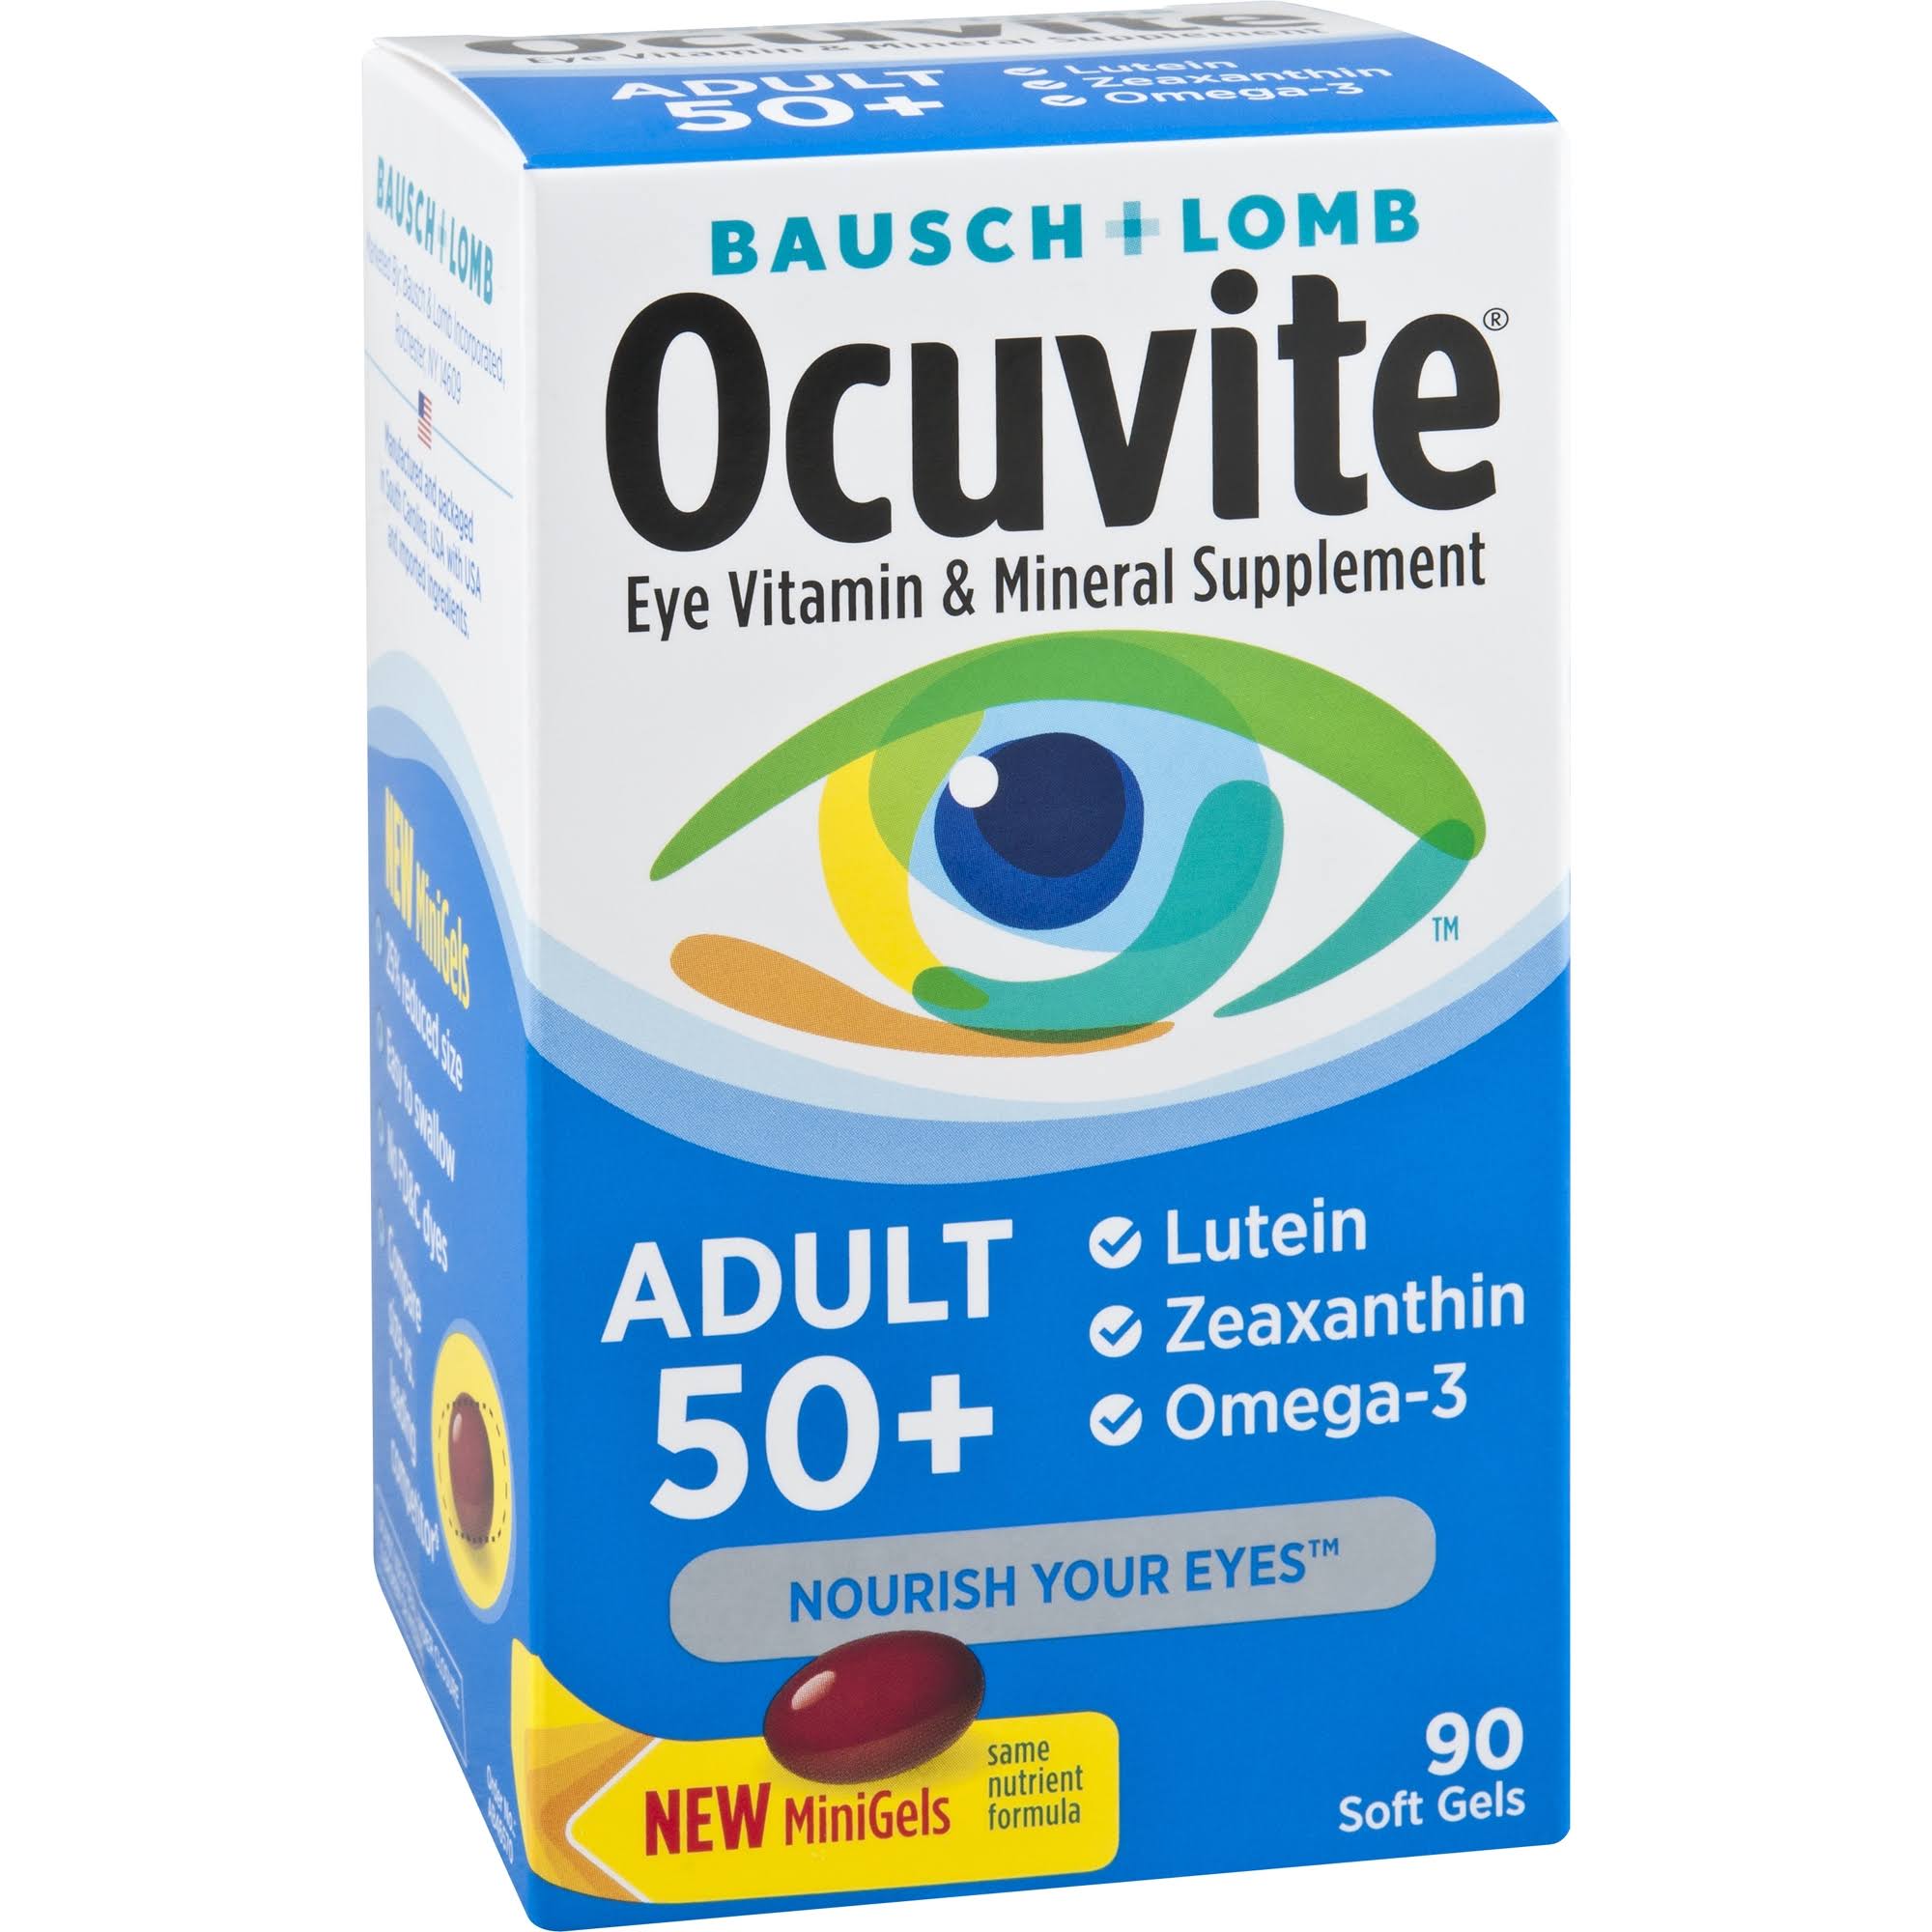 Bausch + Lomb Ocuvite Vitamin & Mineral Supplement - Adult 50+, x90